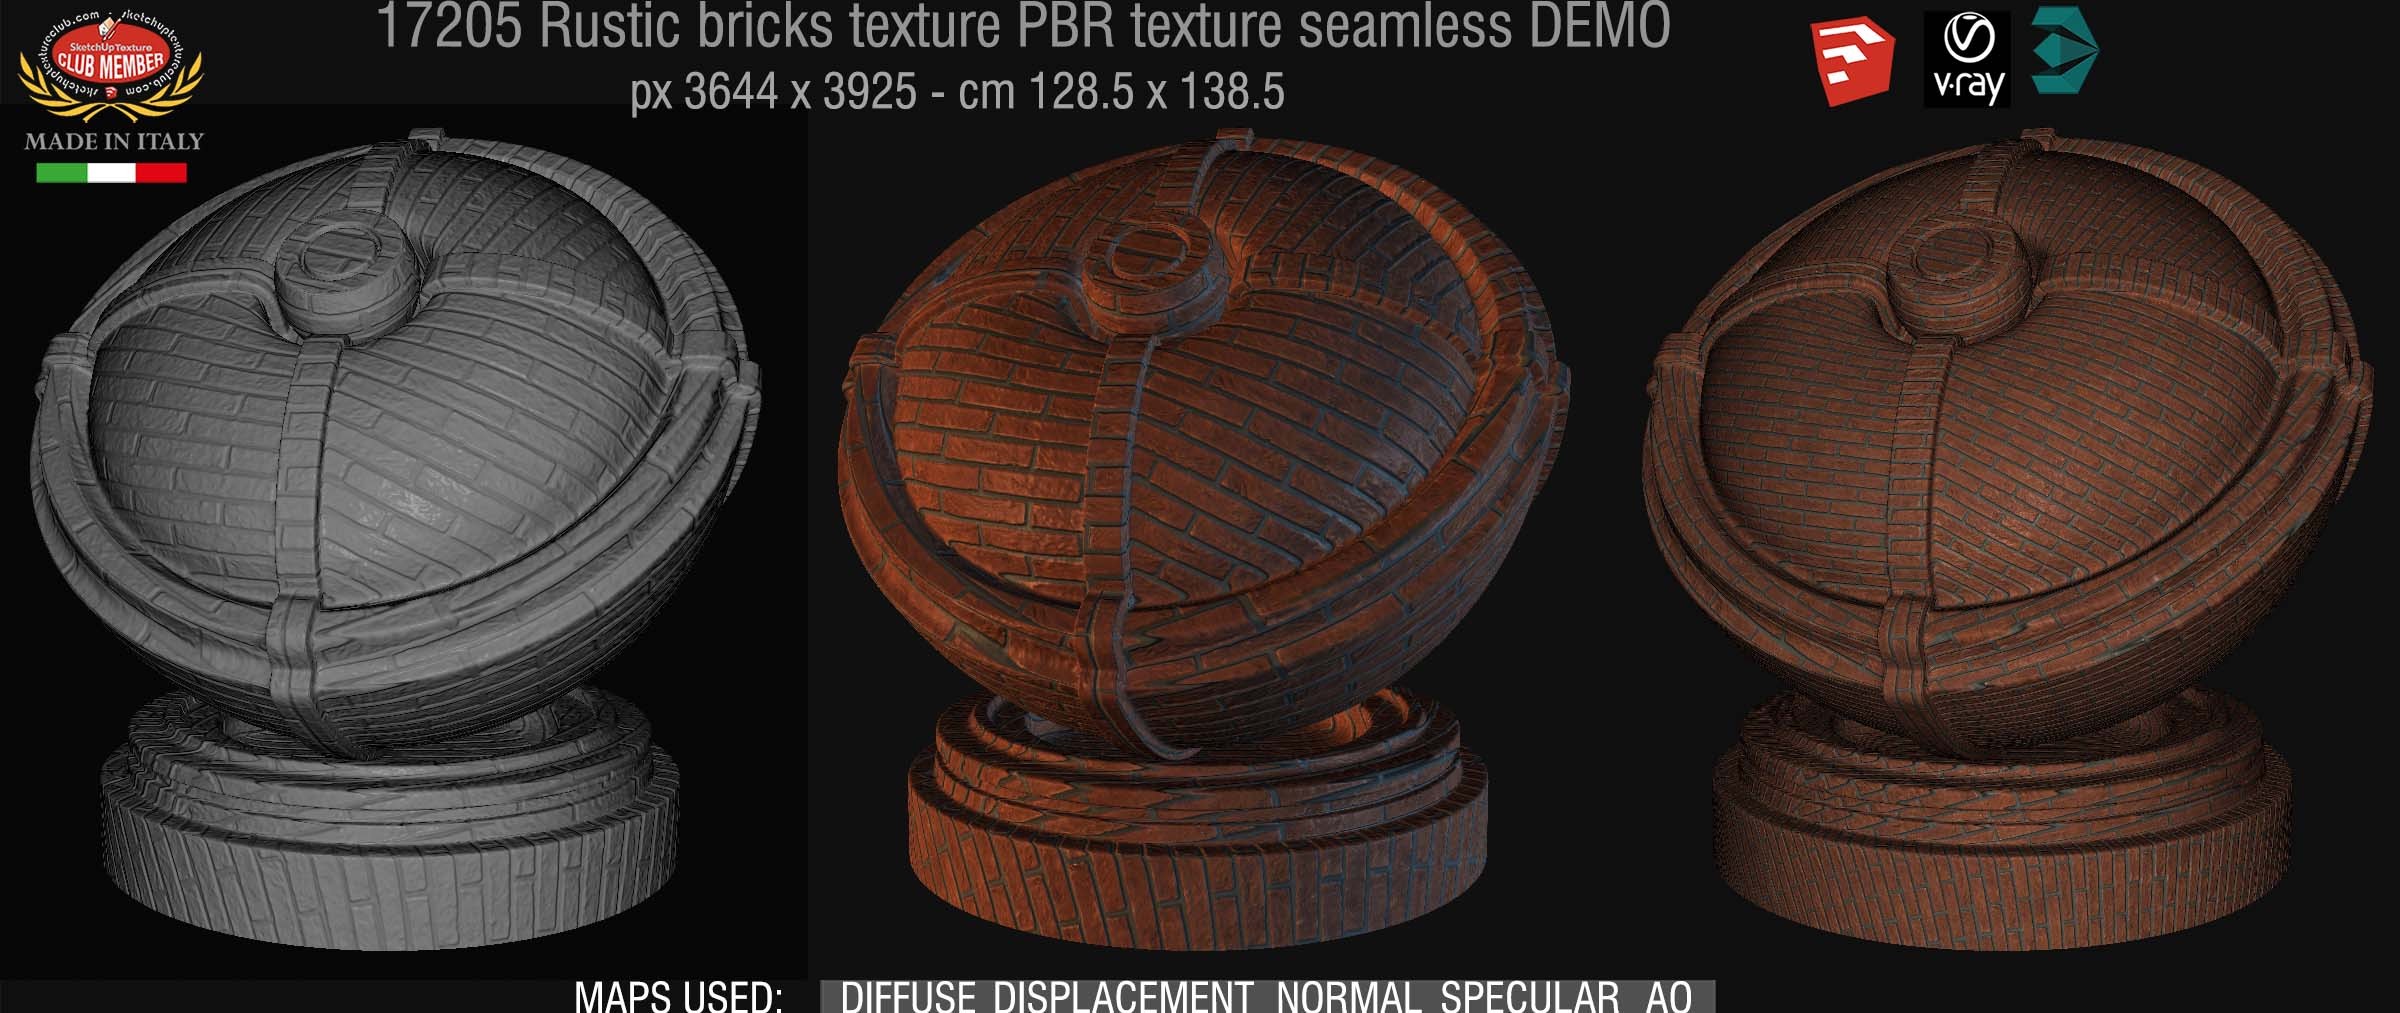 17205 rustic bricks PBR texture seamless DEMO